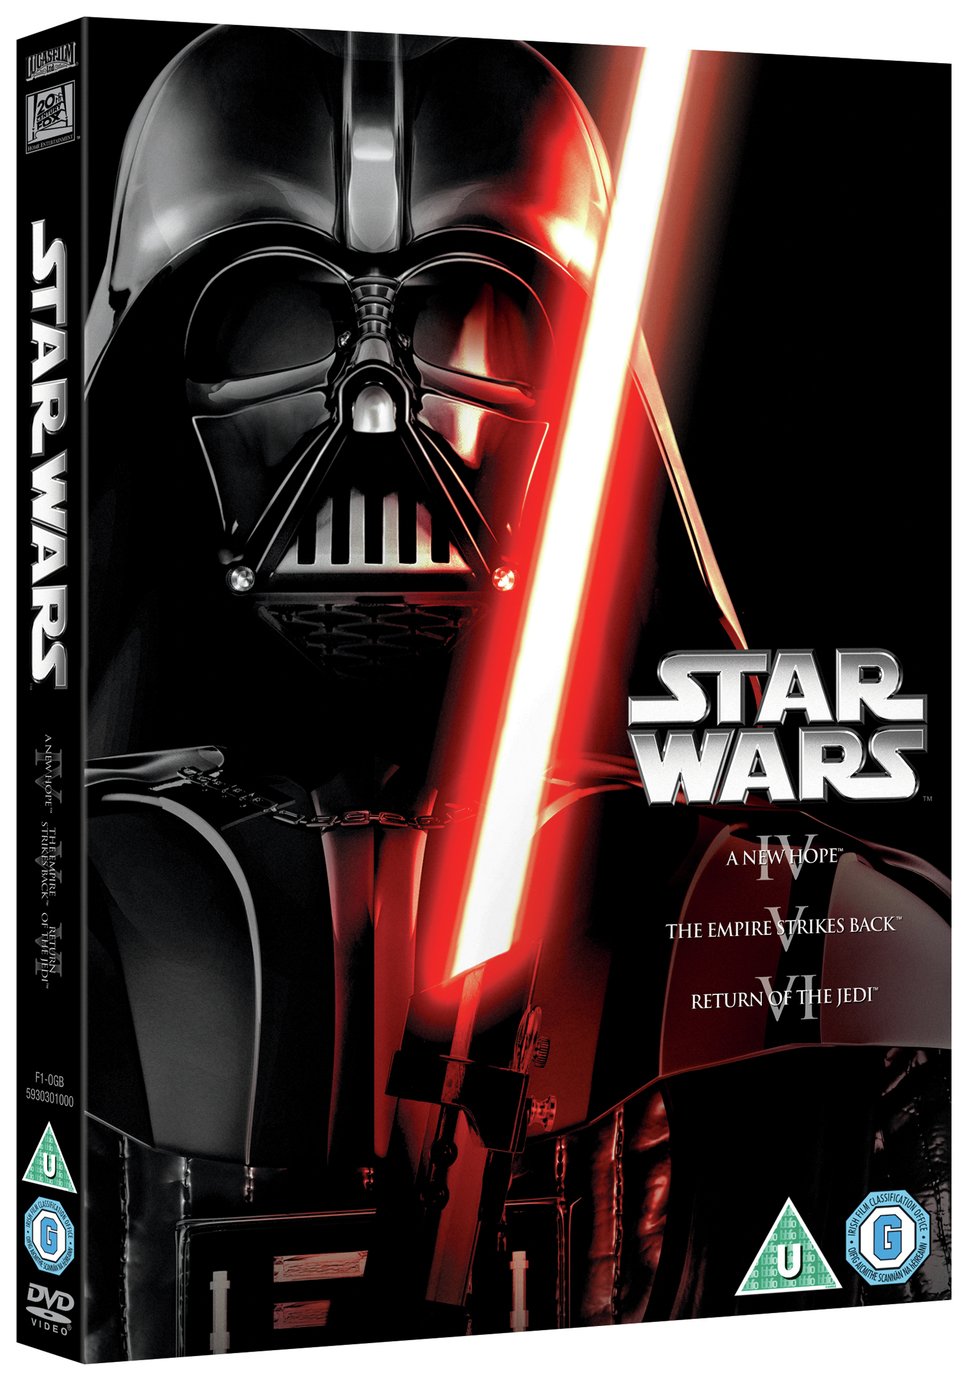 Star Wars: The Original Trilogy DVD Box Set 